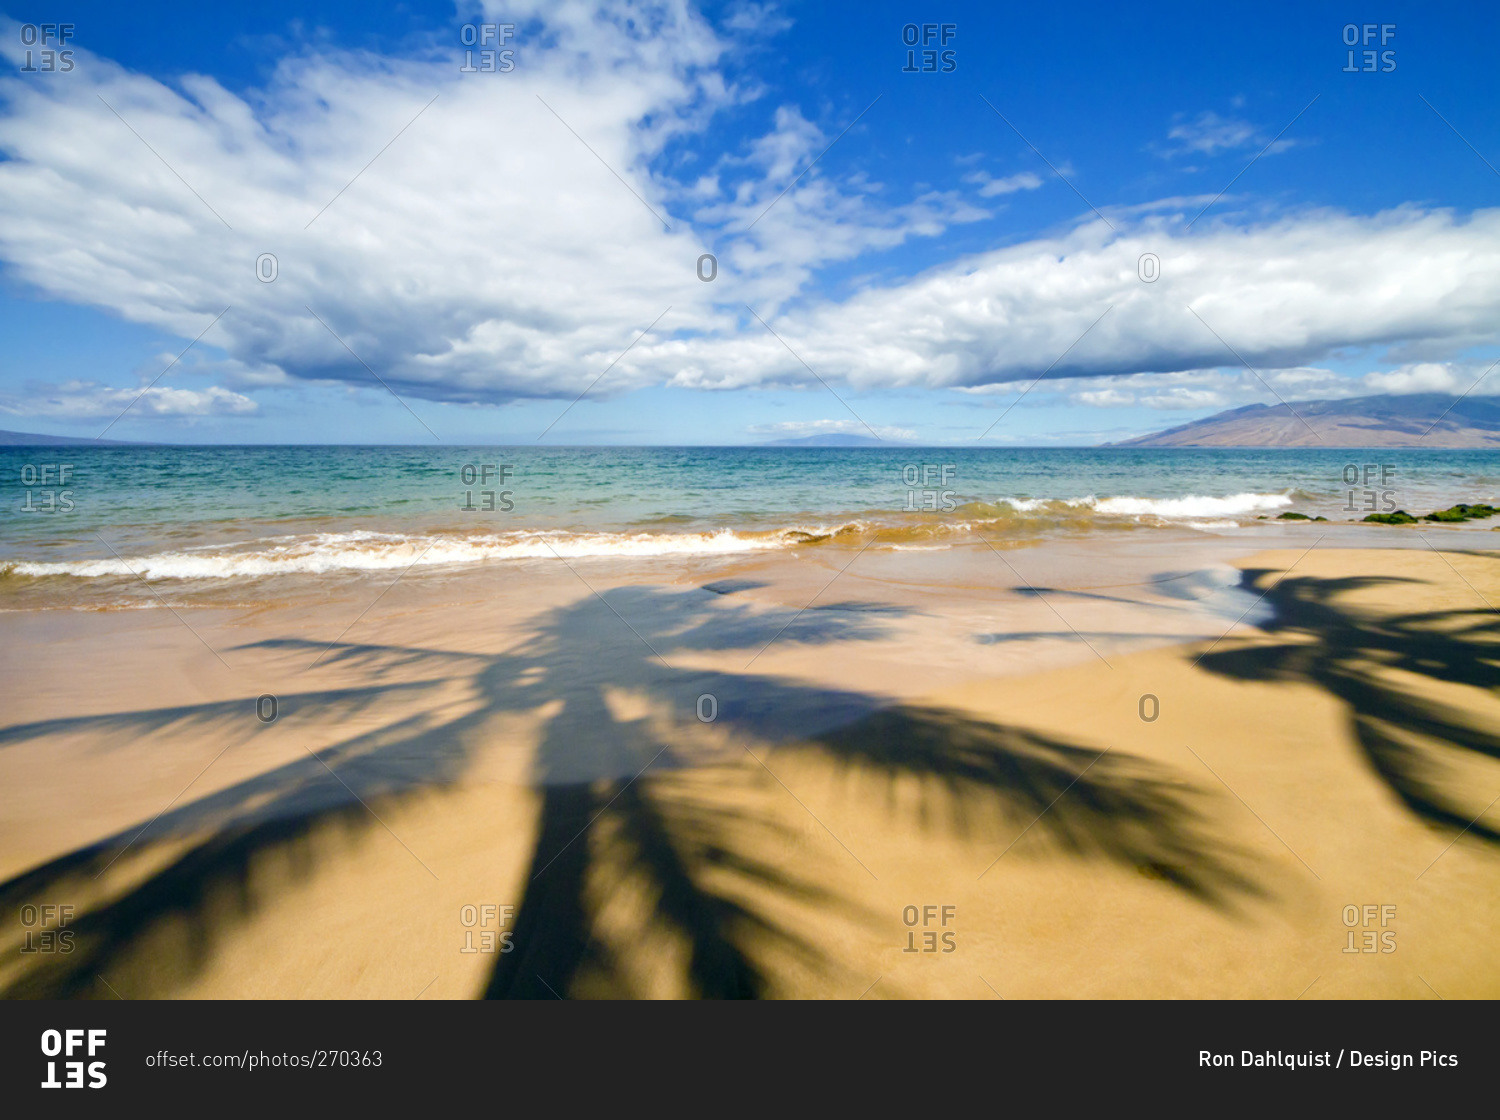 Palm tree shadows on the beach, Keawakapu Beach, Hawaii